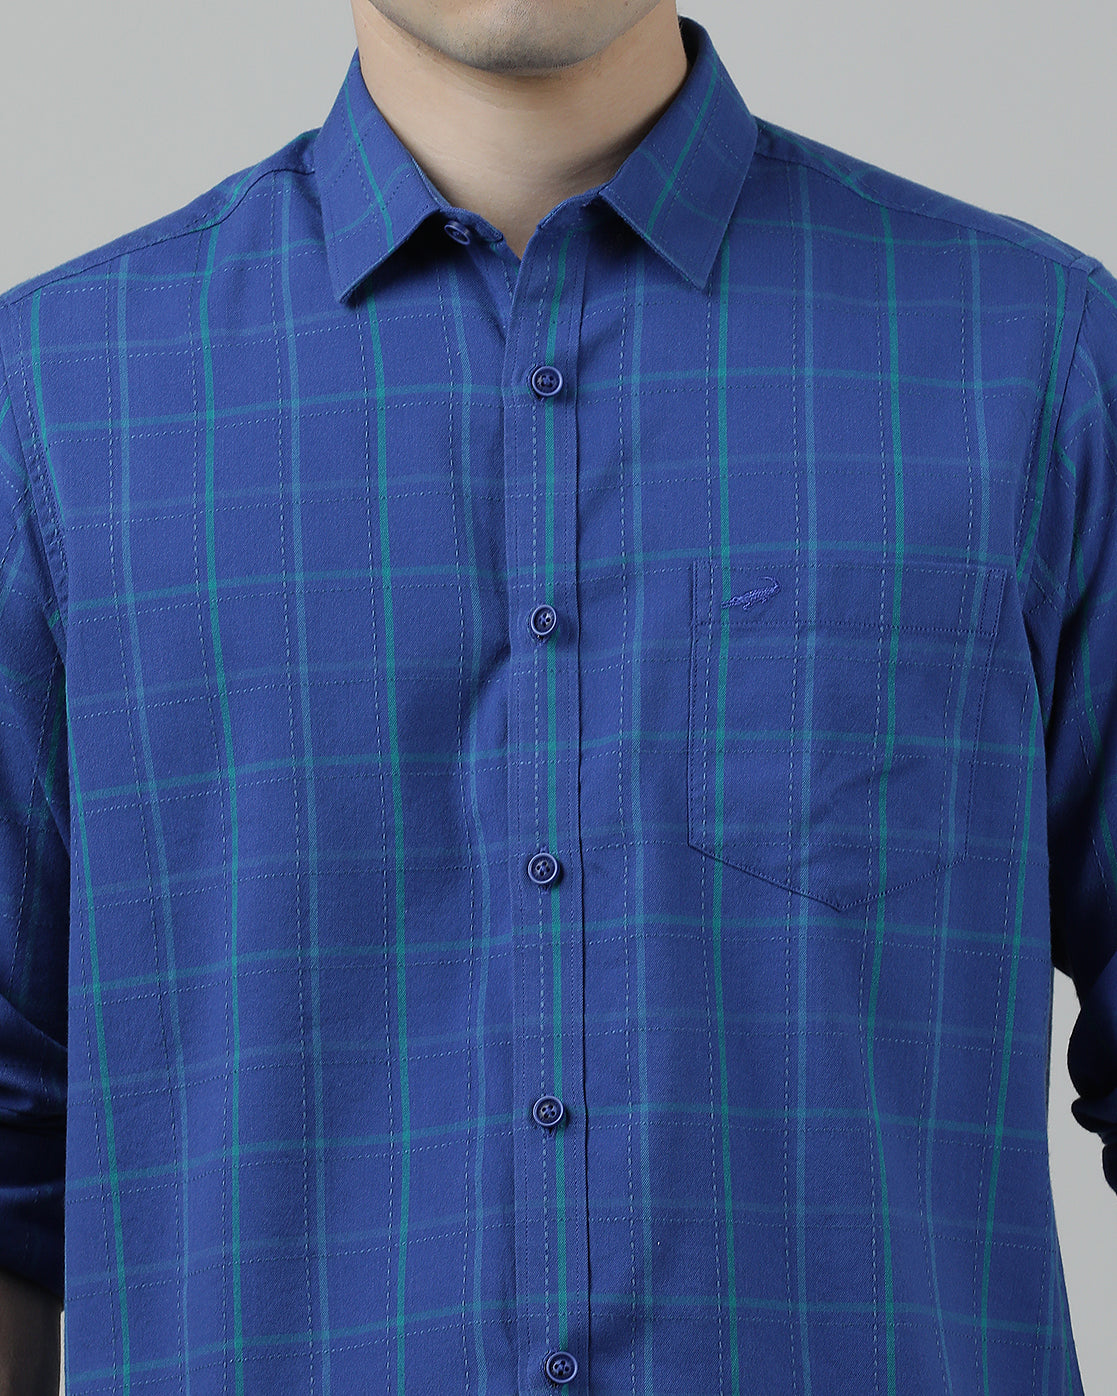 Casual Full Sleeve Comfort Fit Checks Shirt Royal Blue for Men